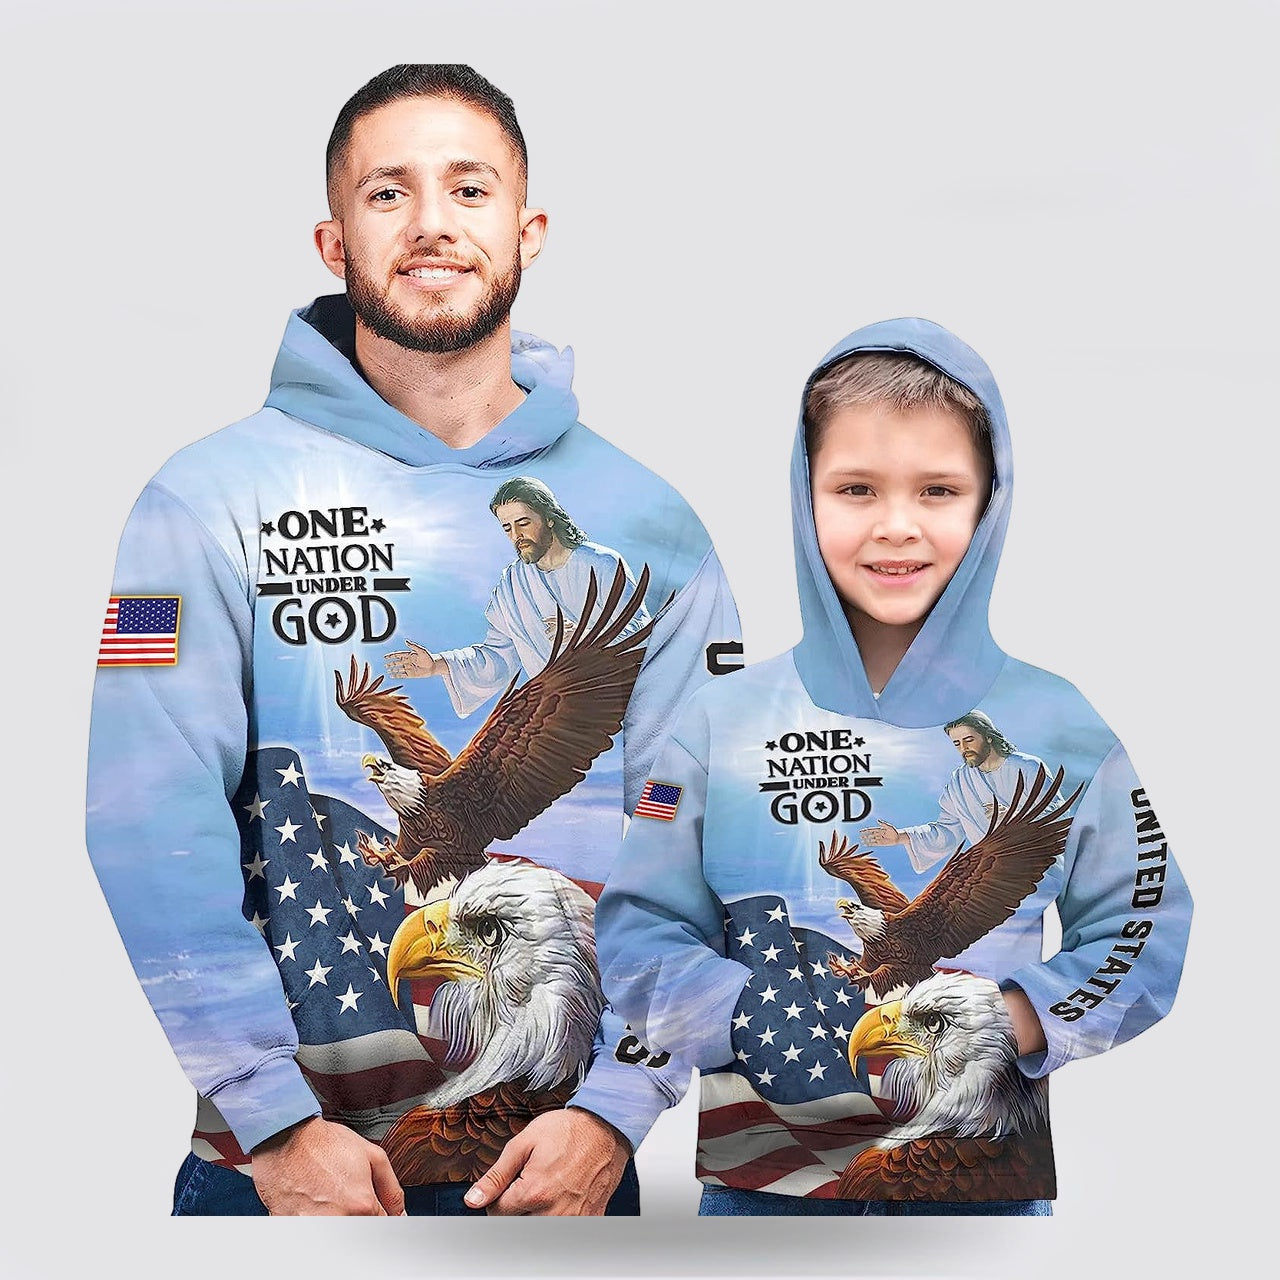 Jesus American Eagles Flag One Nation Under God 3d Hoodies For Women Men - Christian Apparel Hoodies